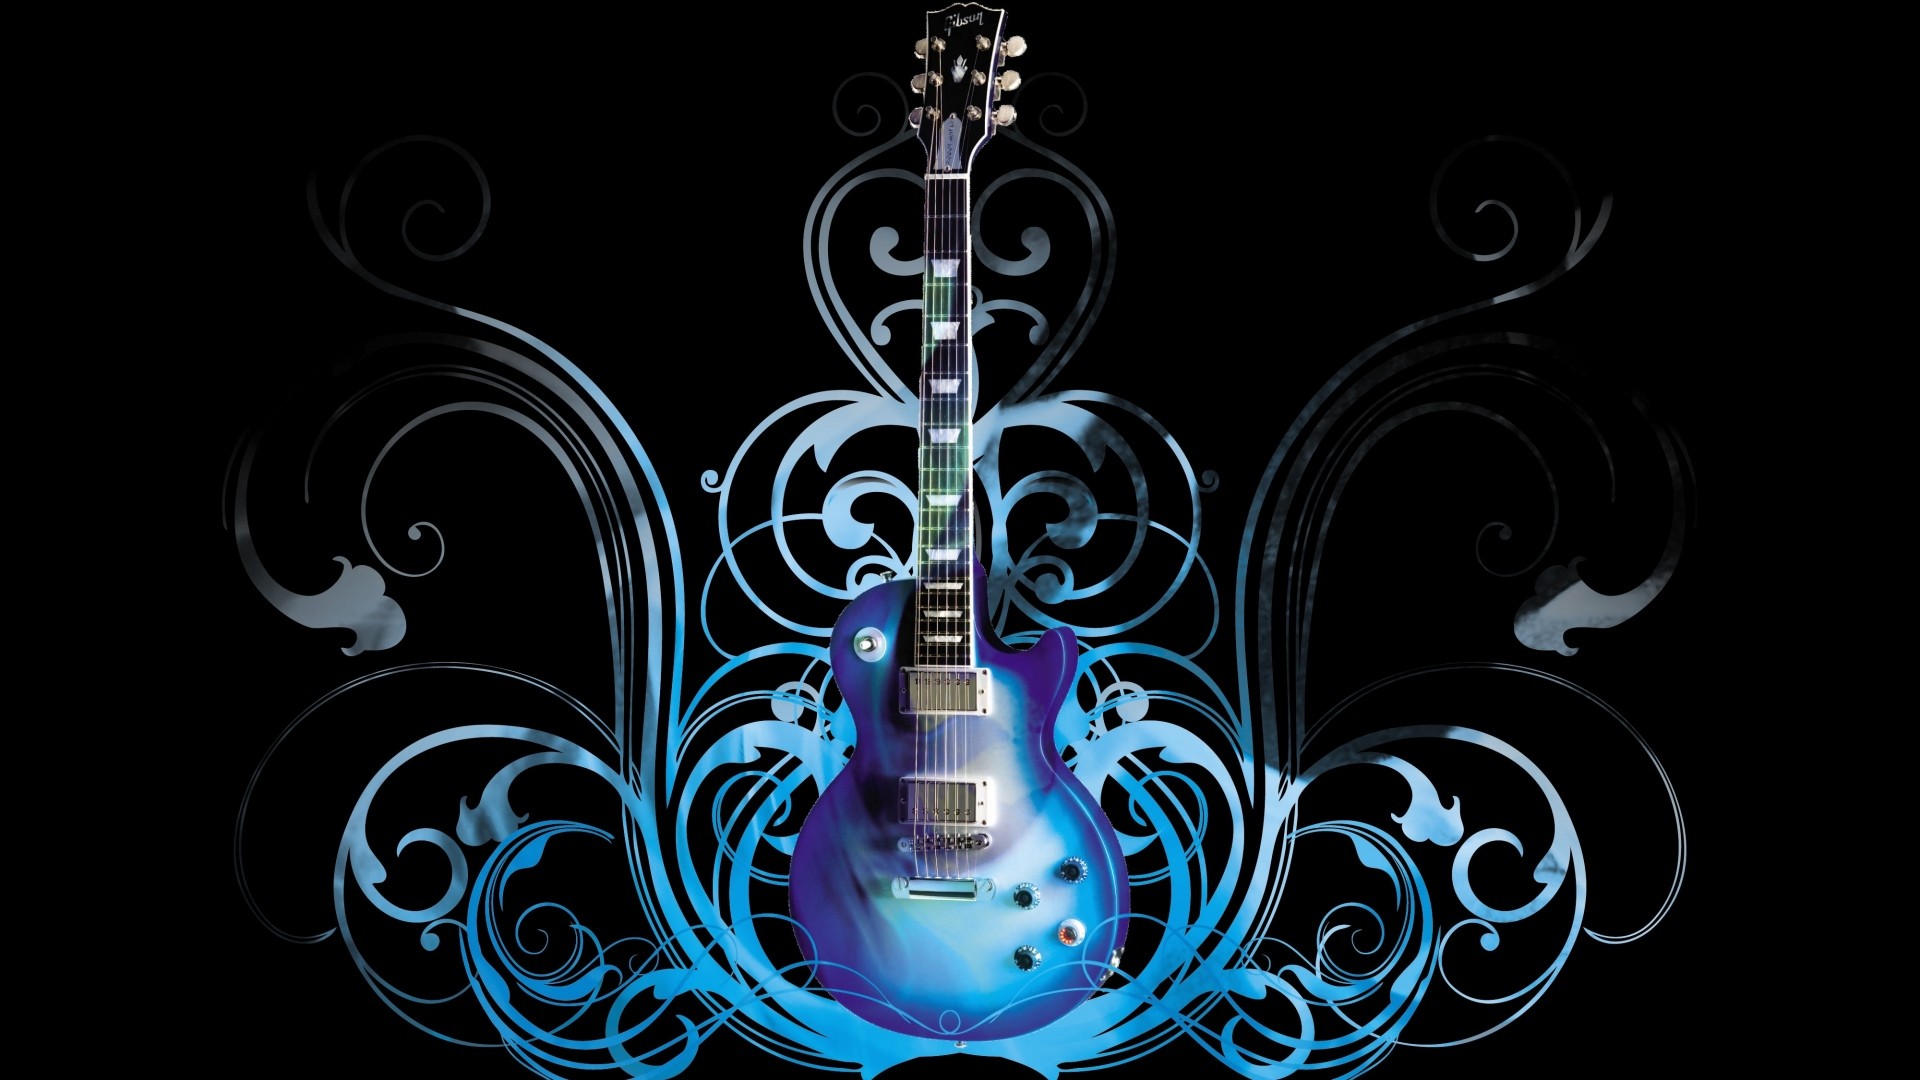 Guitar Photos, Download The BEST Free Guitar Stock Photos & HD Images